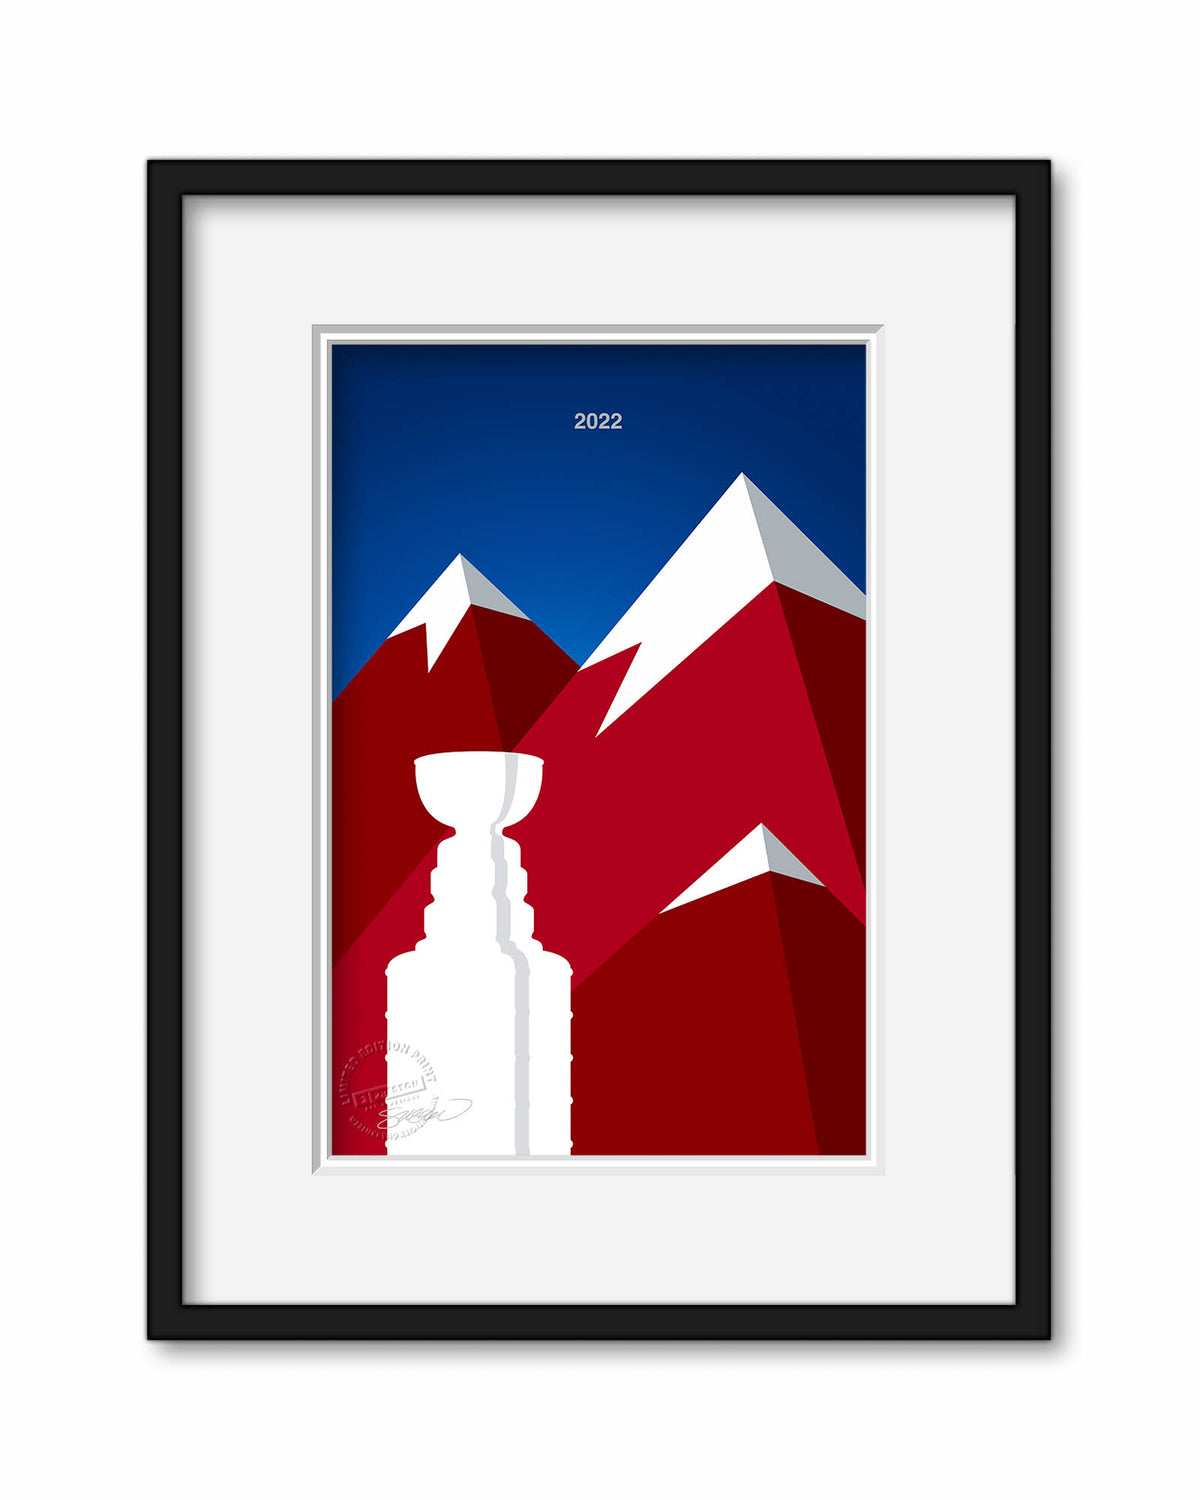 Minimalist Stanley Cup 2022 Limited Edition Fine Art Print